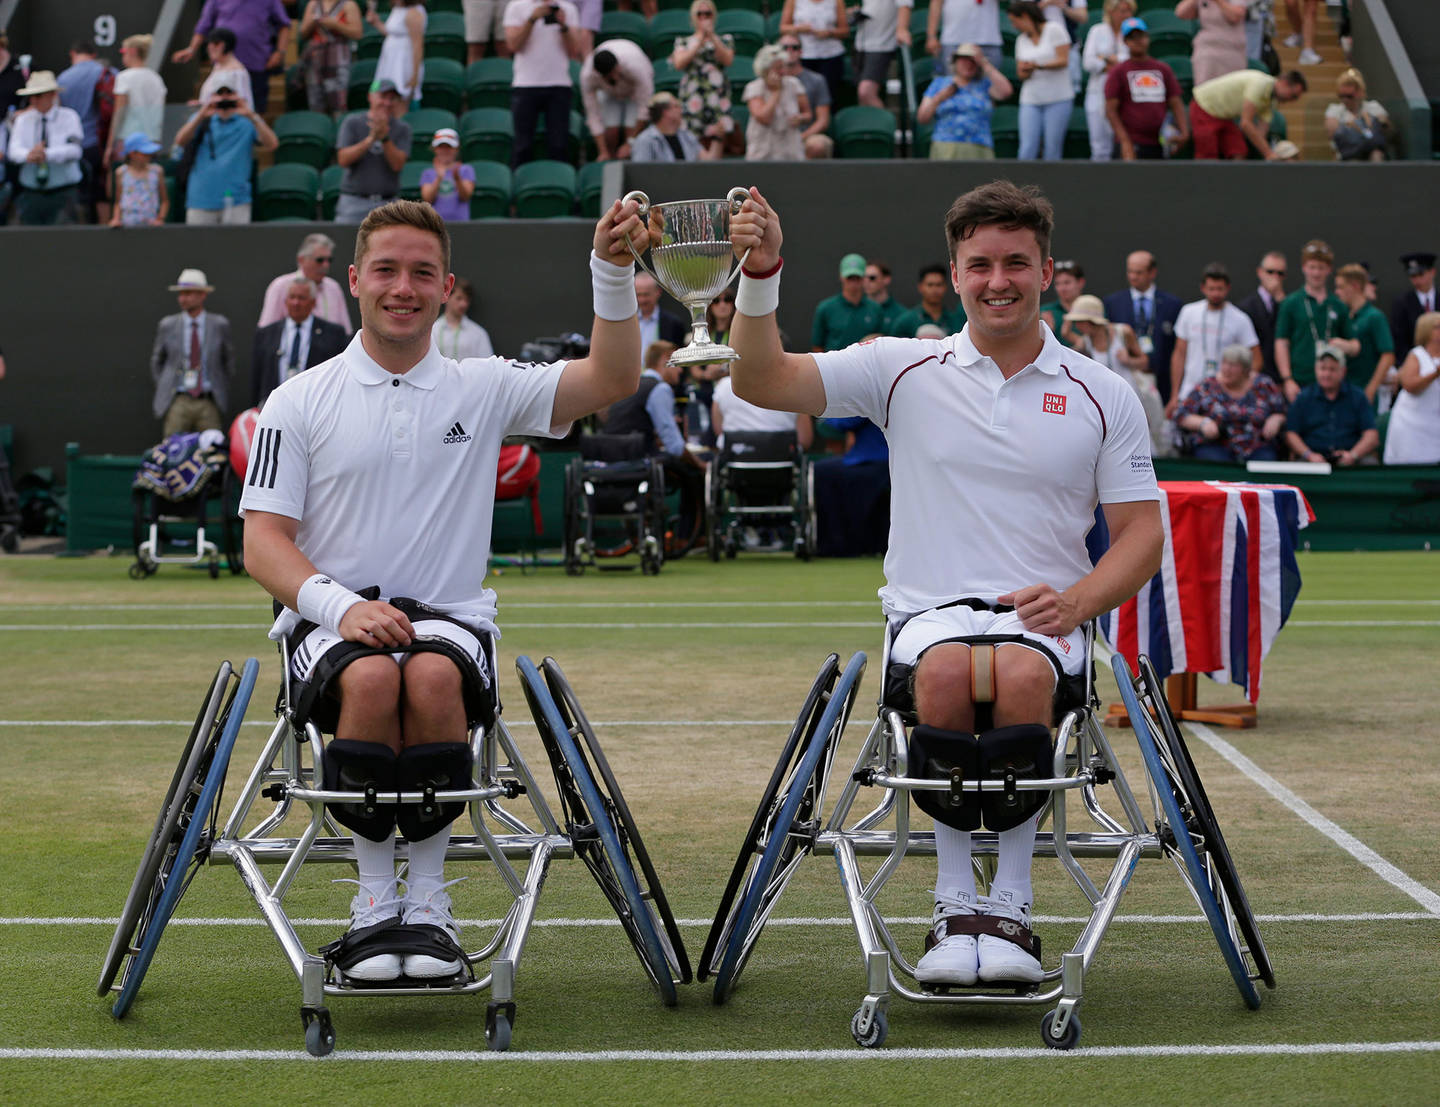 Reid and Hewett lift the 2018 Doubles Wimbledon trophy